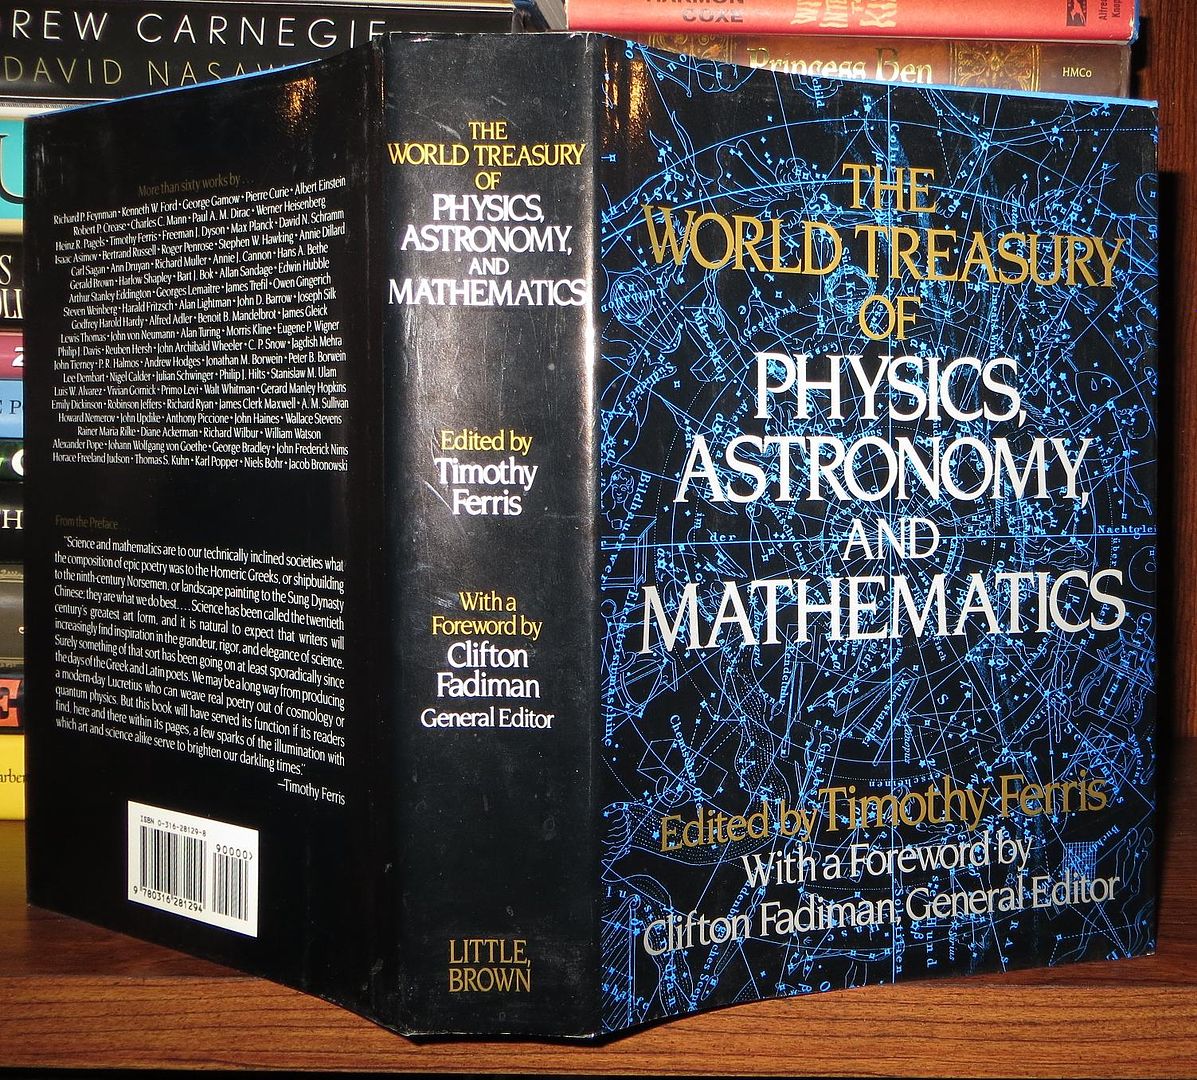 FERRIS, TIMOTHY & CLIFTON FADIMAN - The World Treasury of Physics, Astronomy and Mathematics